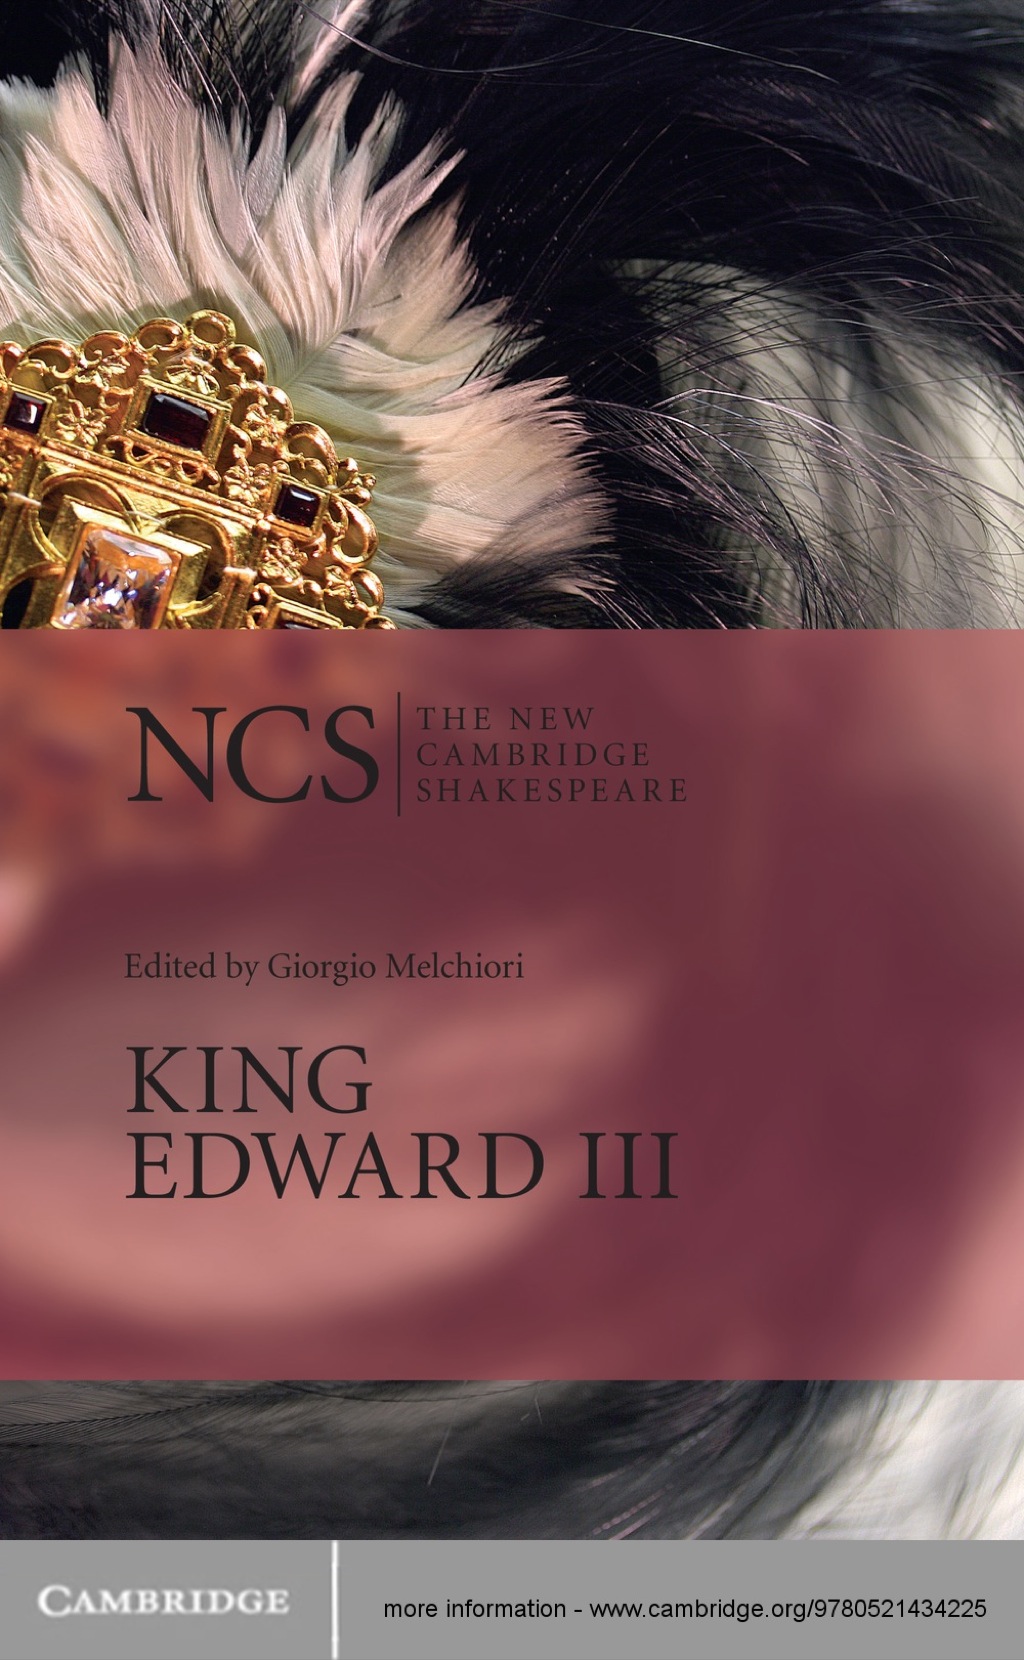 King Edward III (eBook) - William Shakespeare